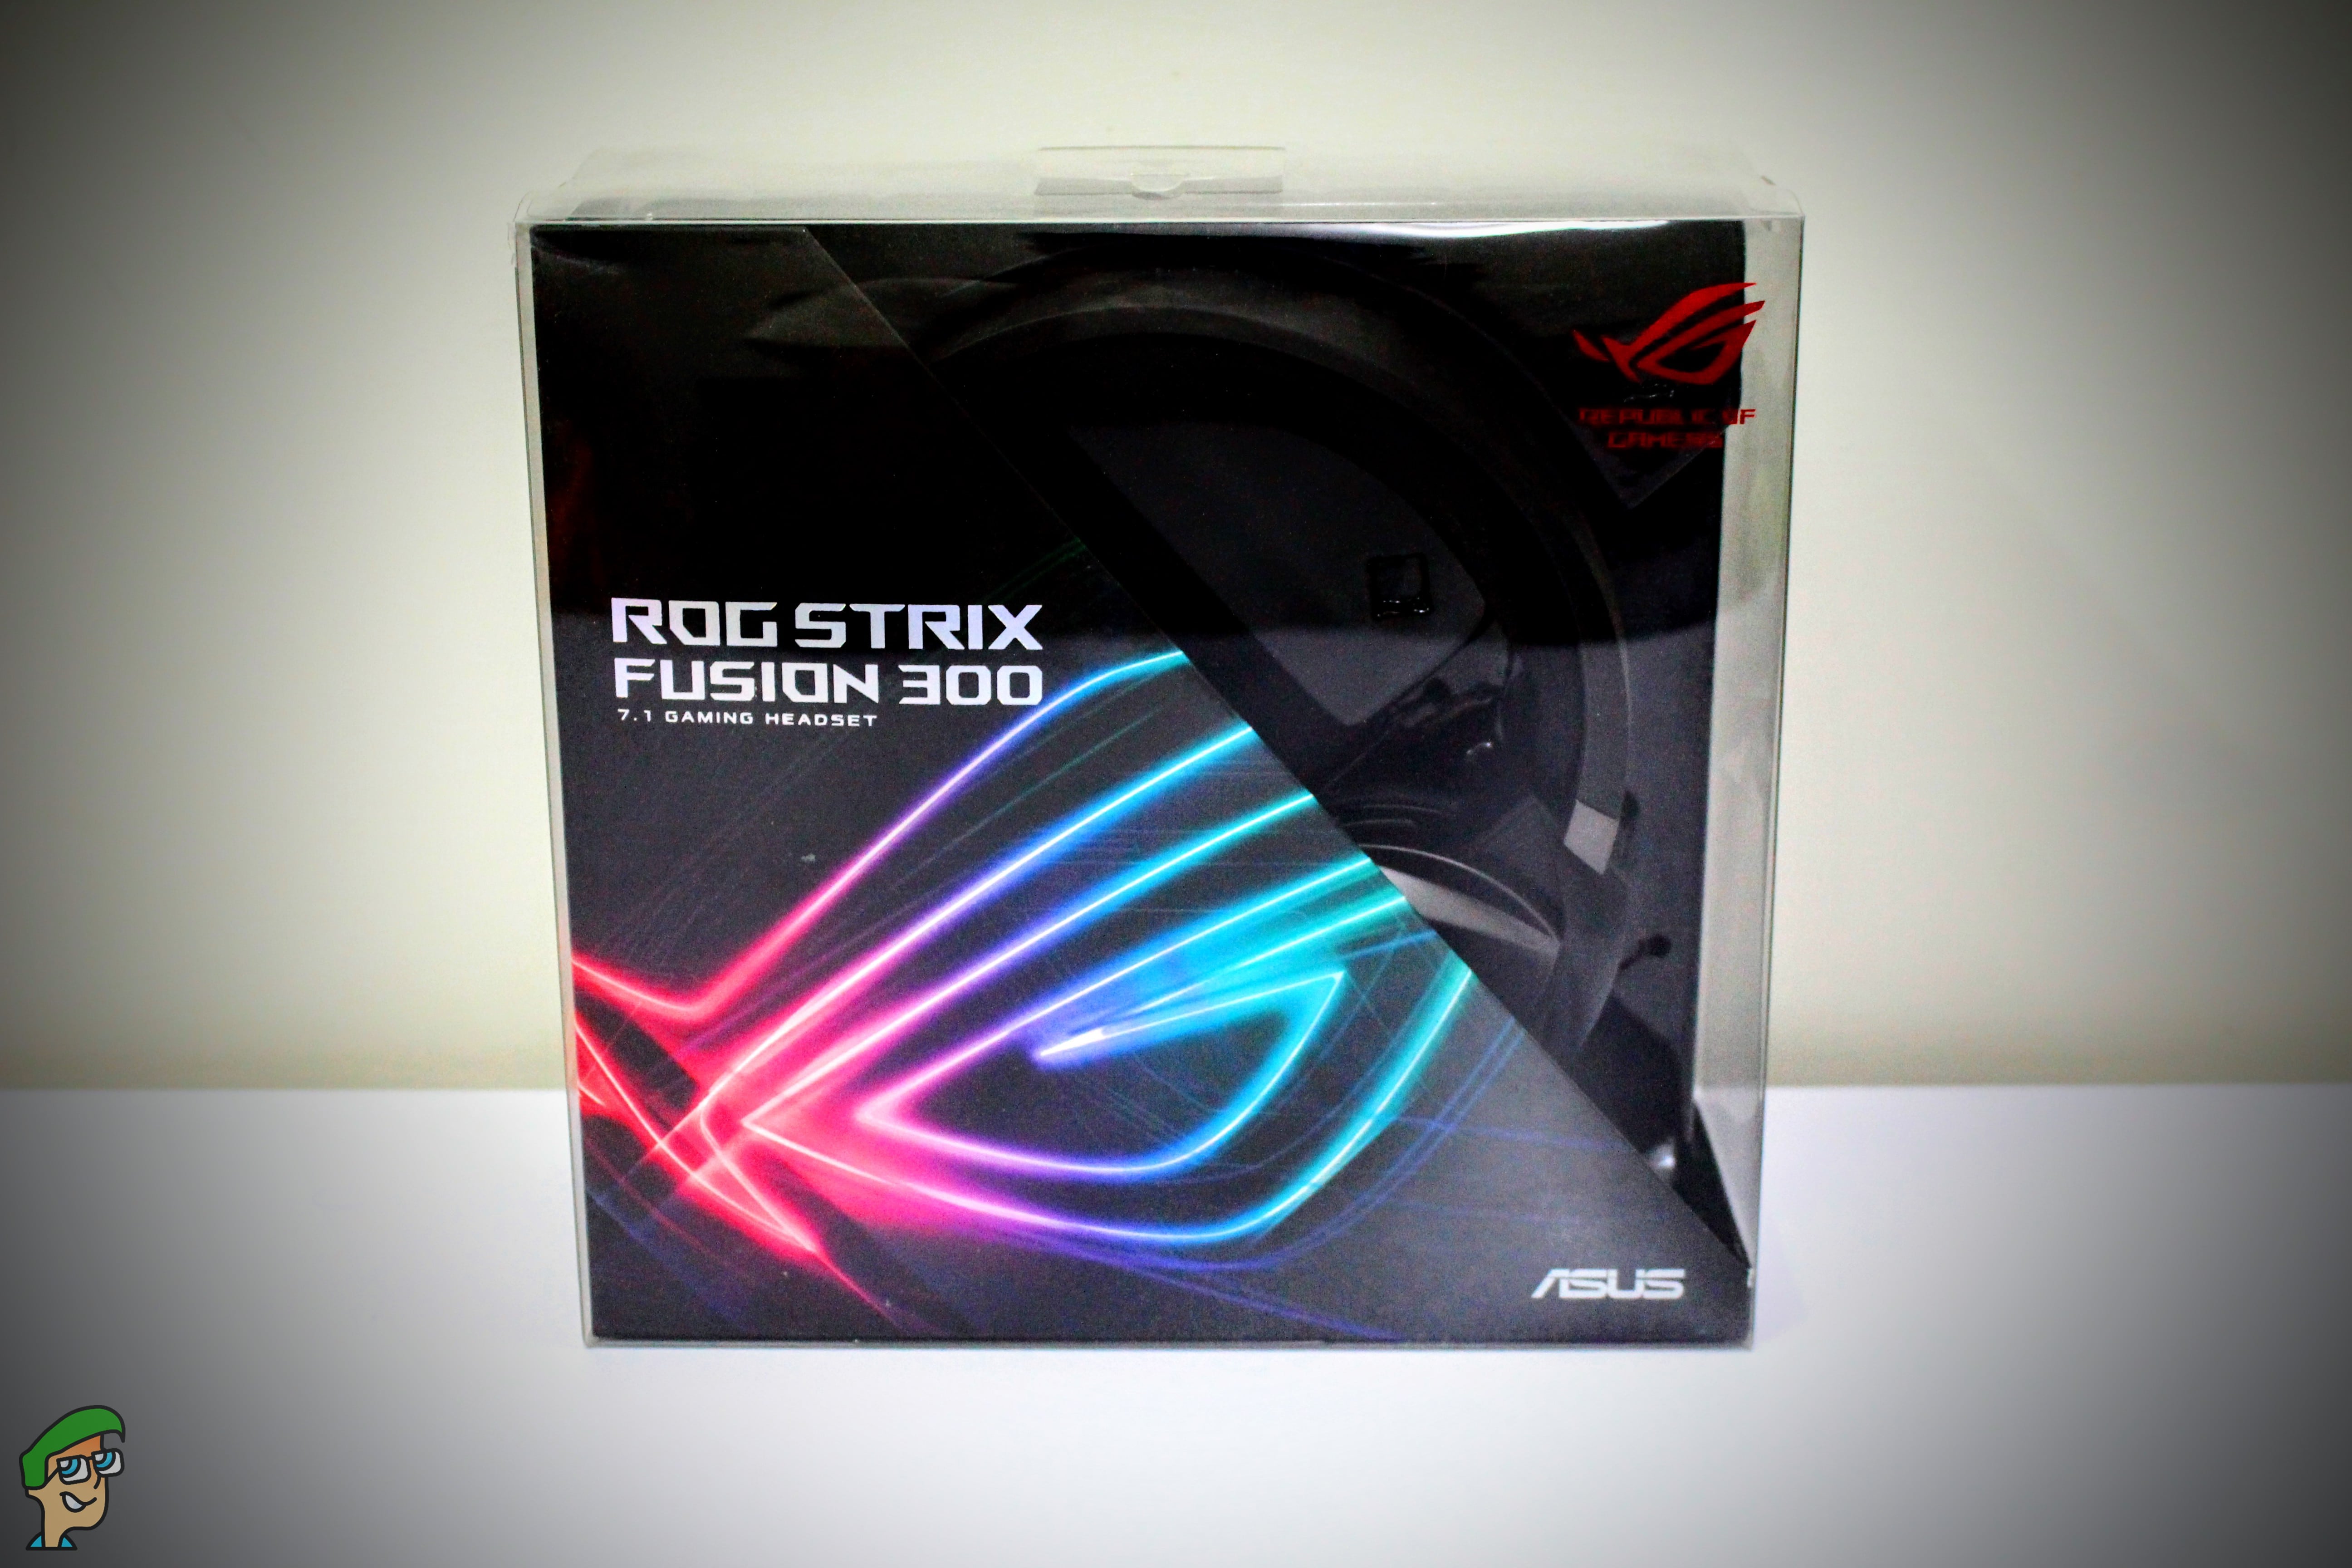 Asus Rog Strix Fusion 300 7 1 Gaming Headset Review Appuals Com